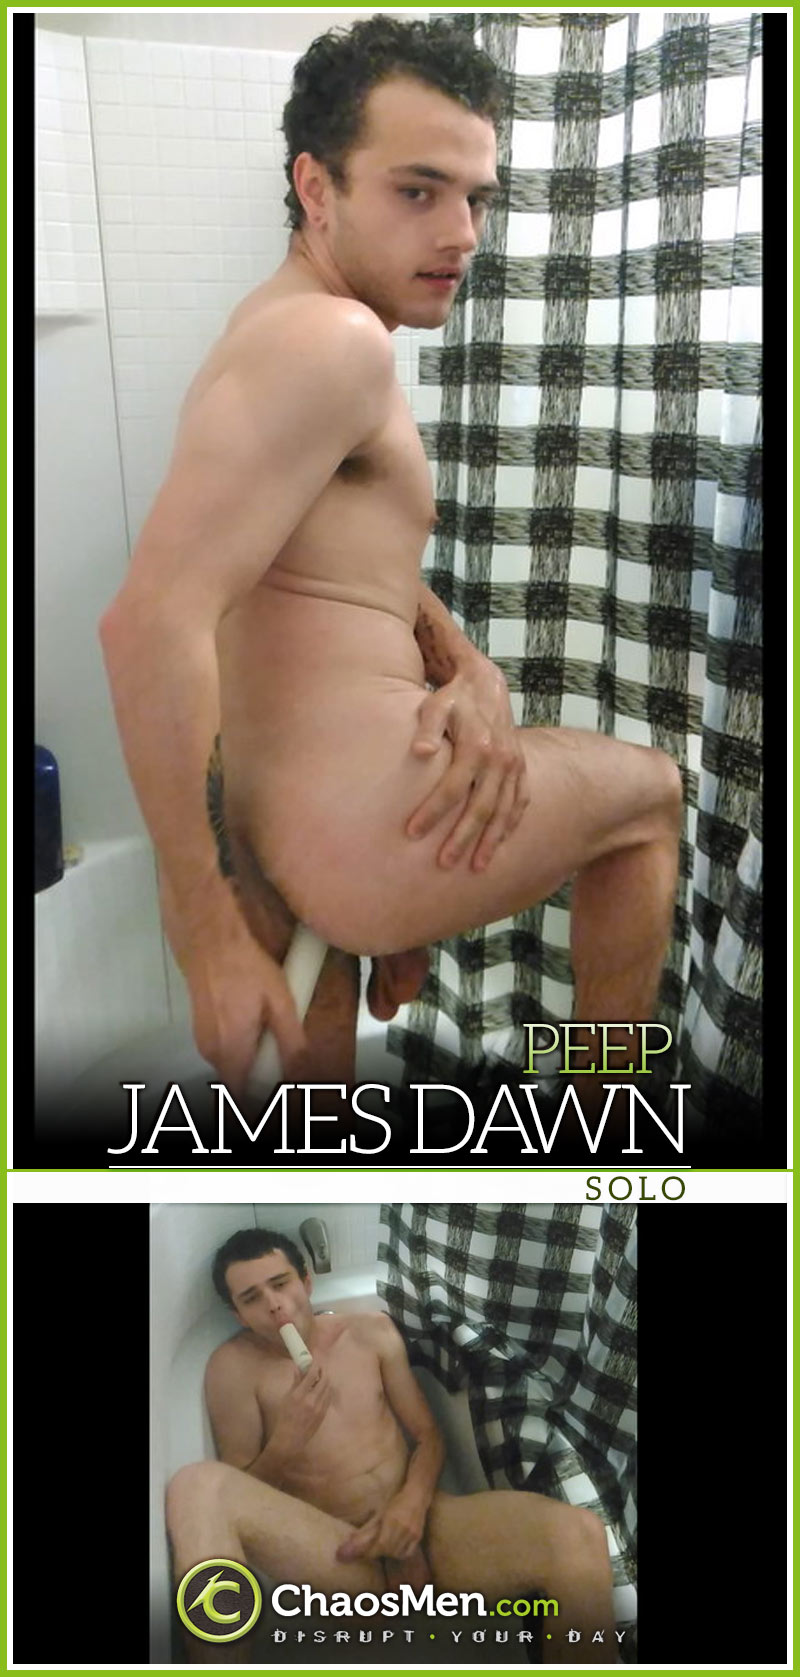 James Dawn 'Peep' at ChaosMen